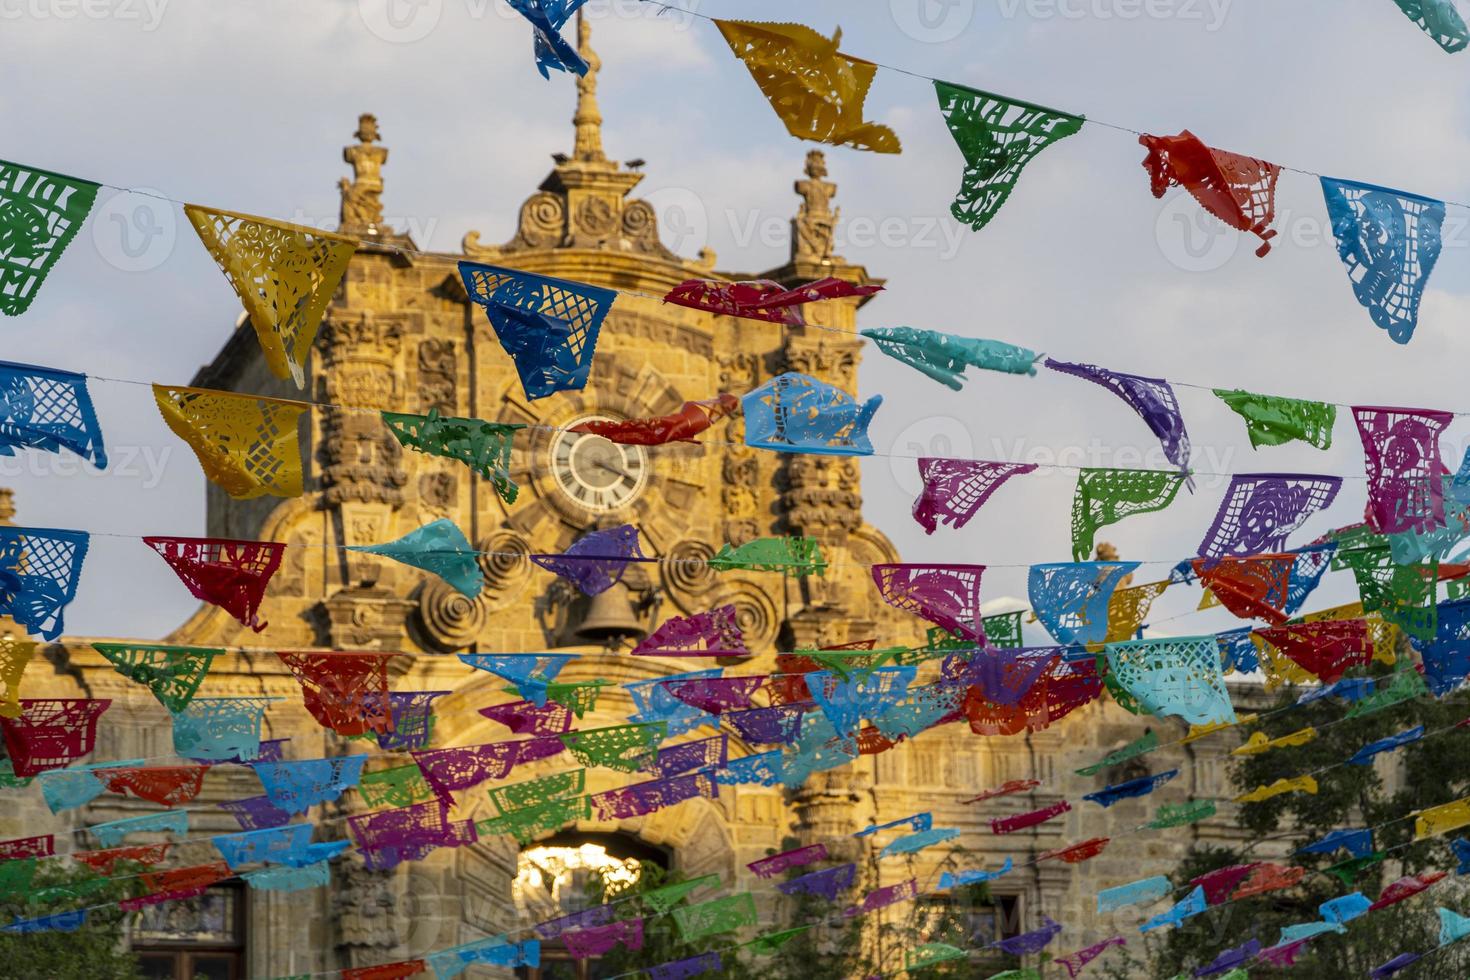 papel picado hangende in Mexicaans festiviteiten in openbaar ruimtes, Mexico foto